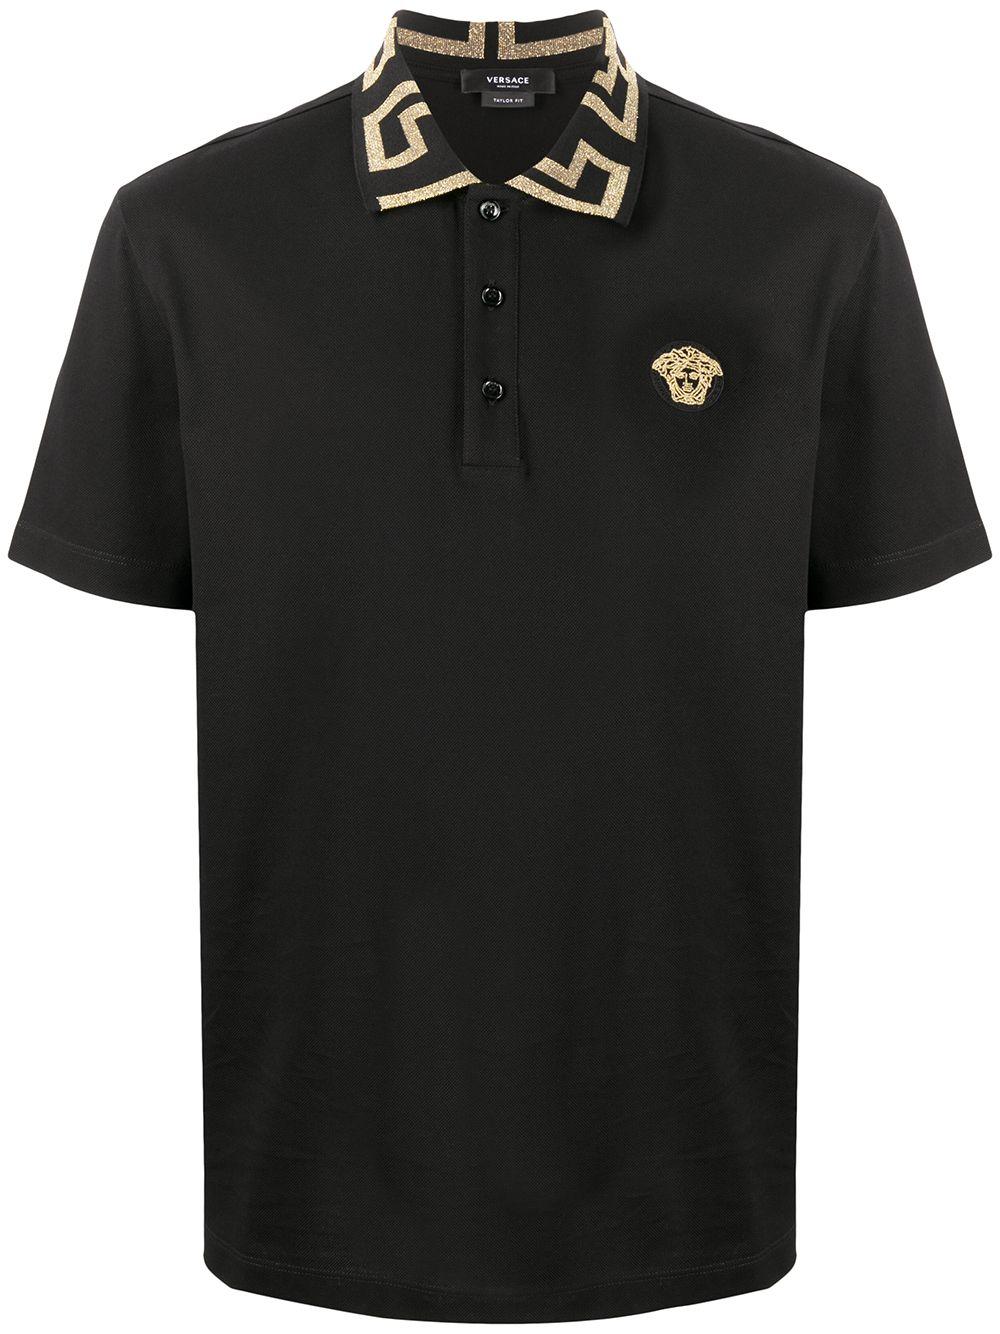 Versace Cotton Greca Collar Polo Shirt in Black for Men - Lyst